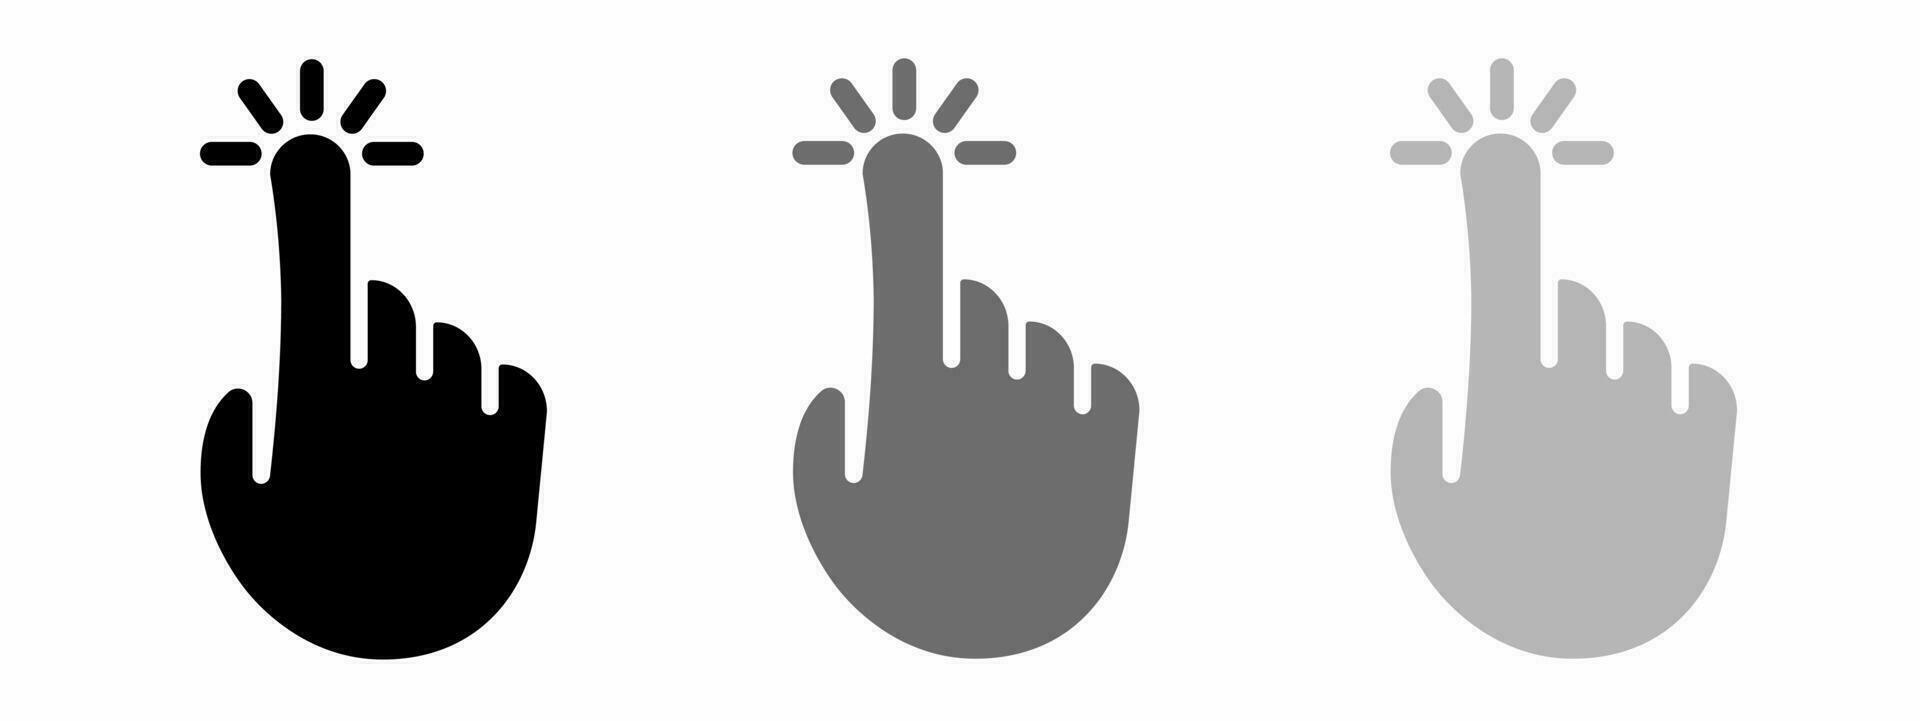 Hand cursor icon illustration set for business. Stock vector illustration.